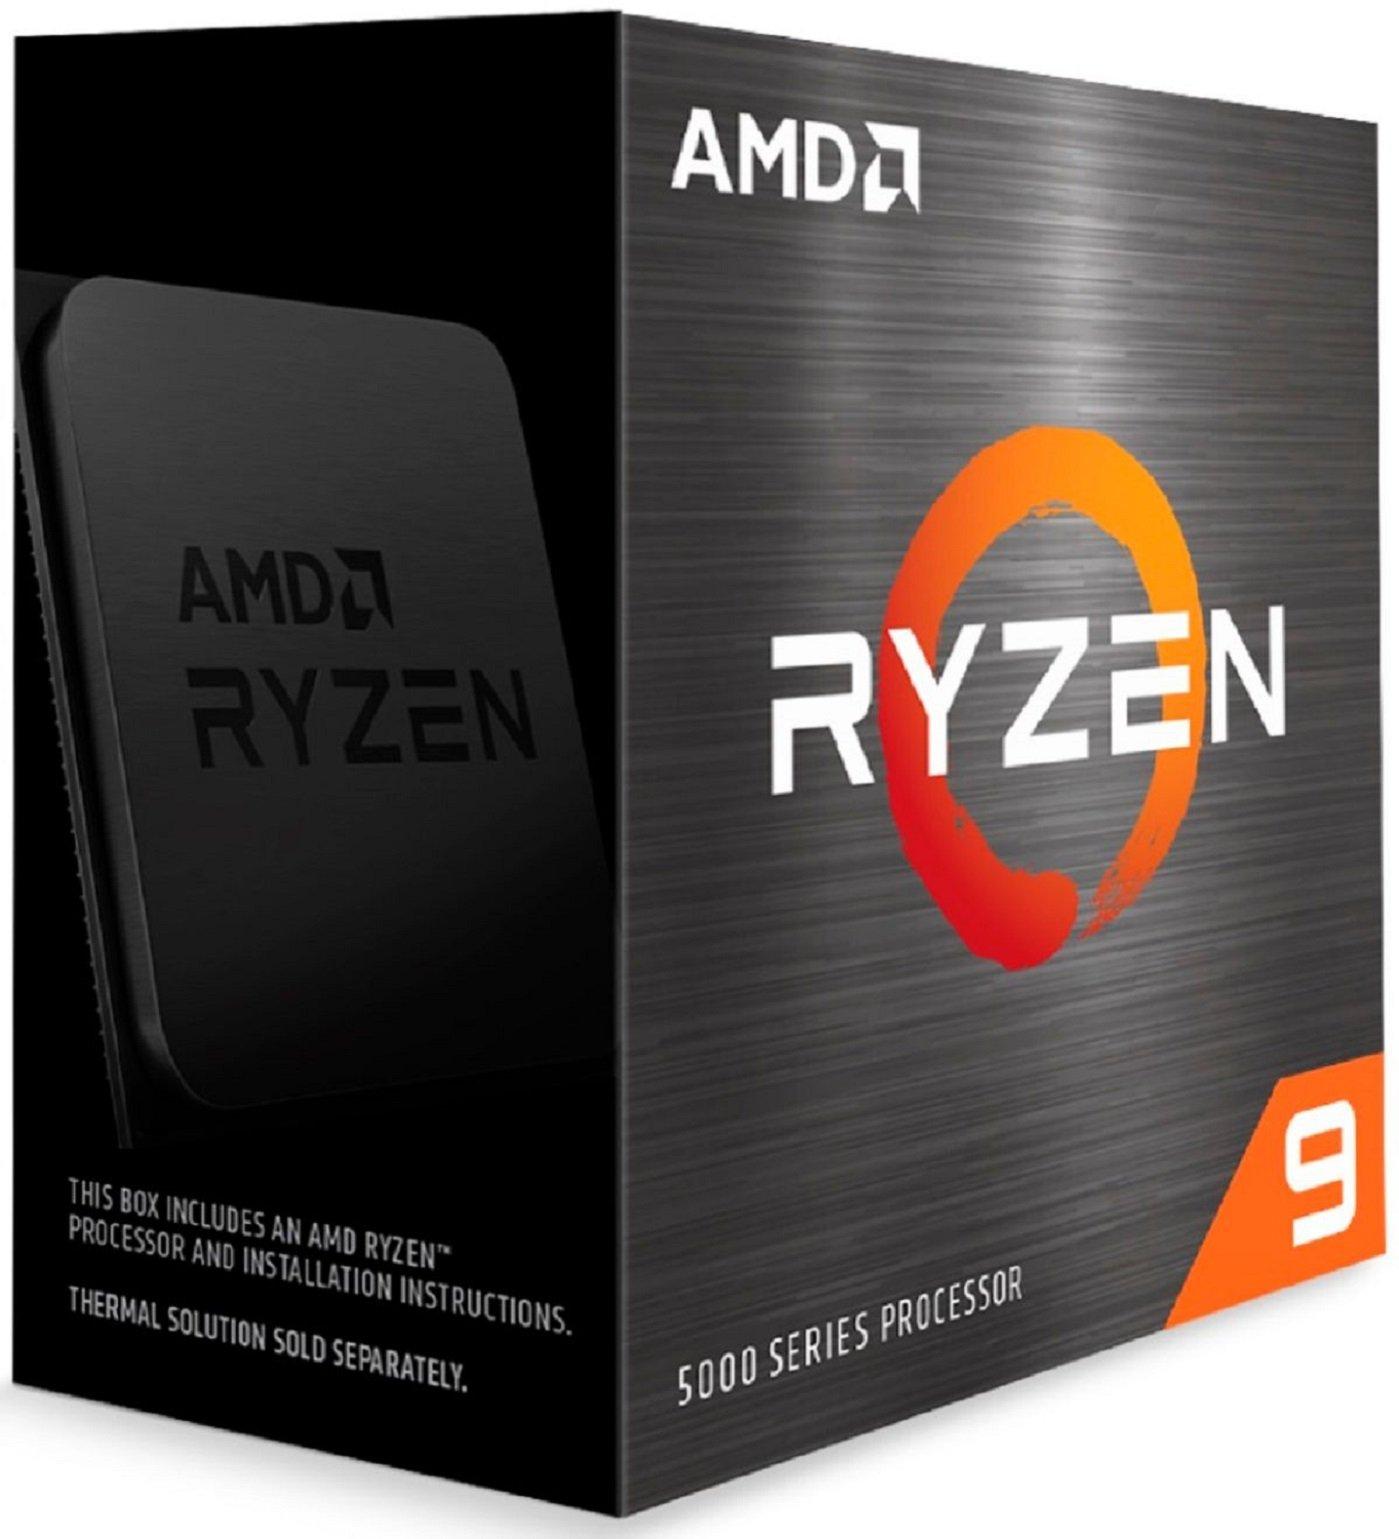 AMD Ryzen 9 5950X Processor 16-core 32 Threads up to 4.9GHz